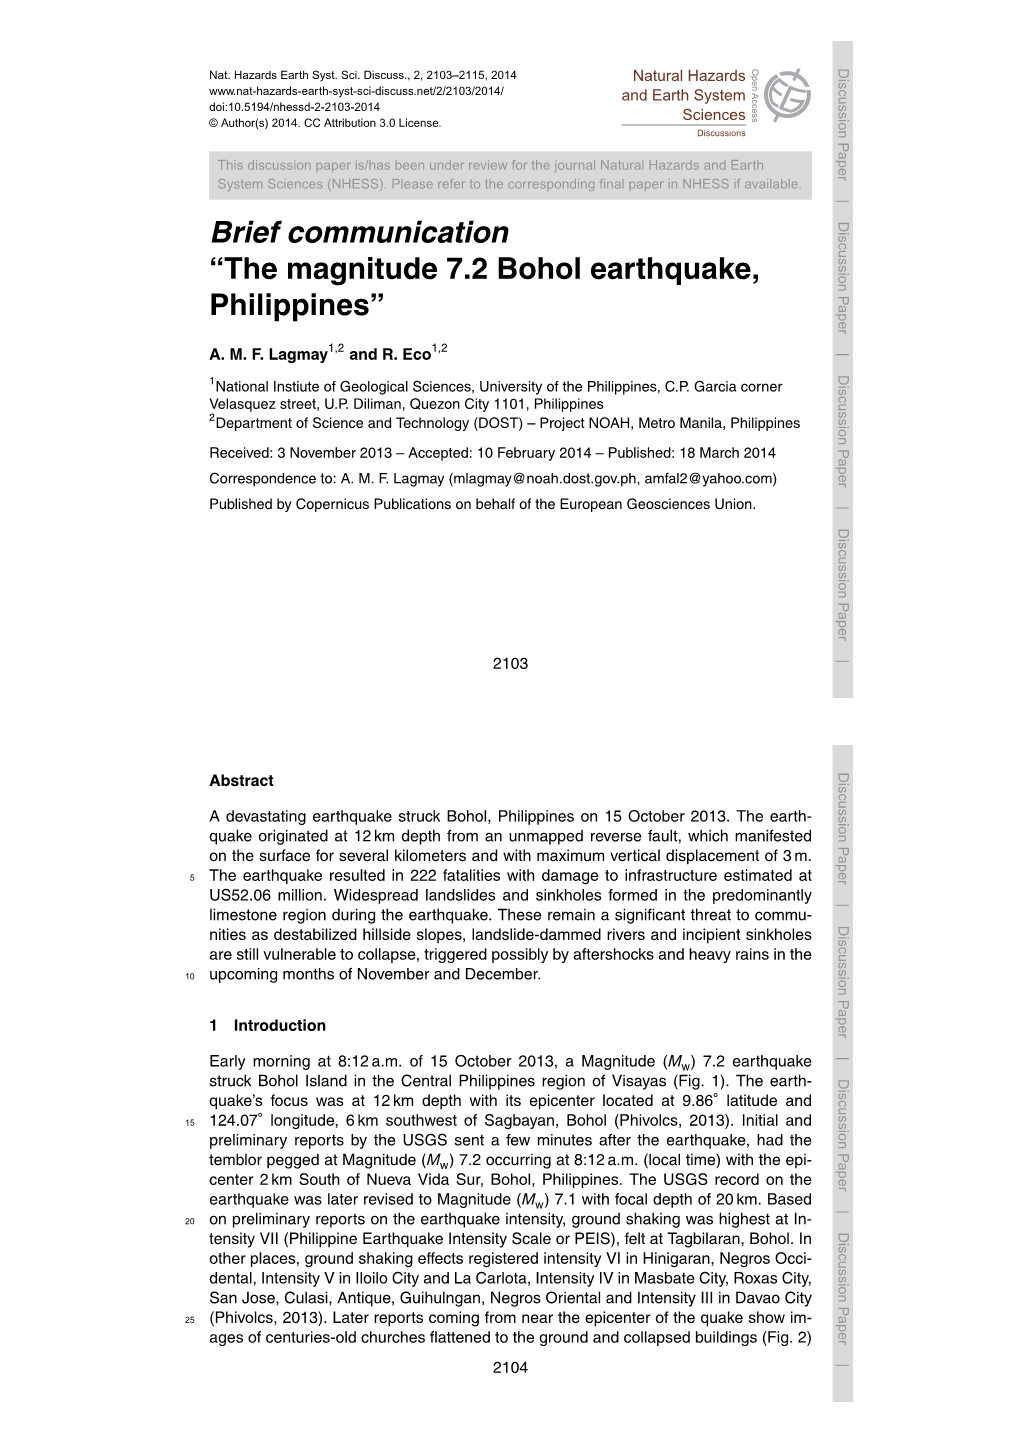 Brief Communication “The Magnitude 7.2 Bohol Earthquake, Philippines” A